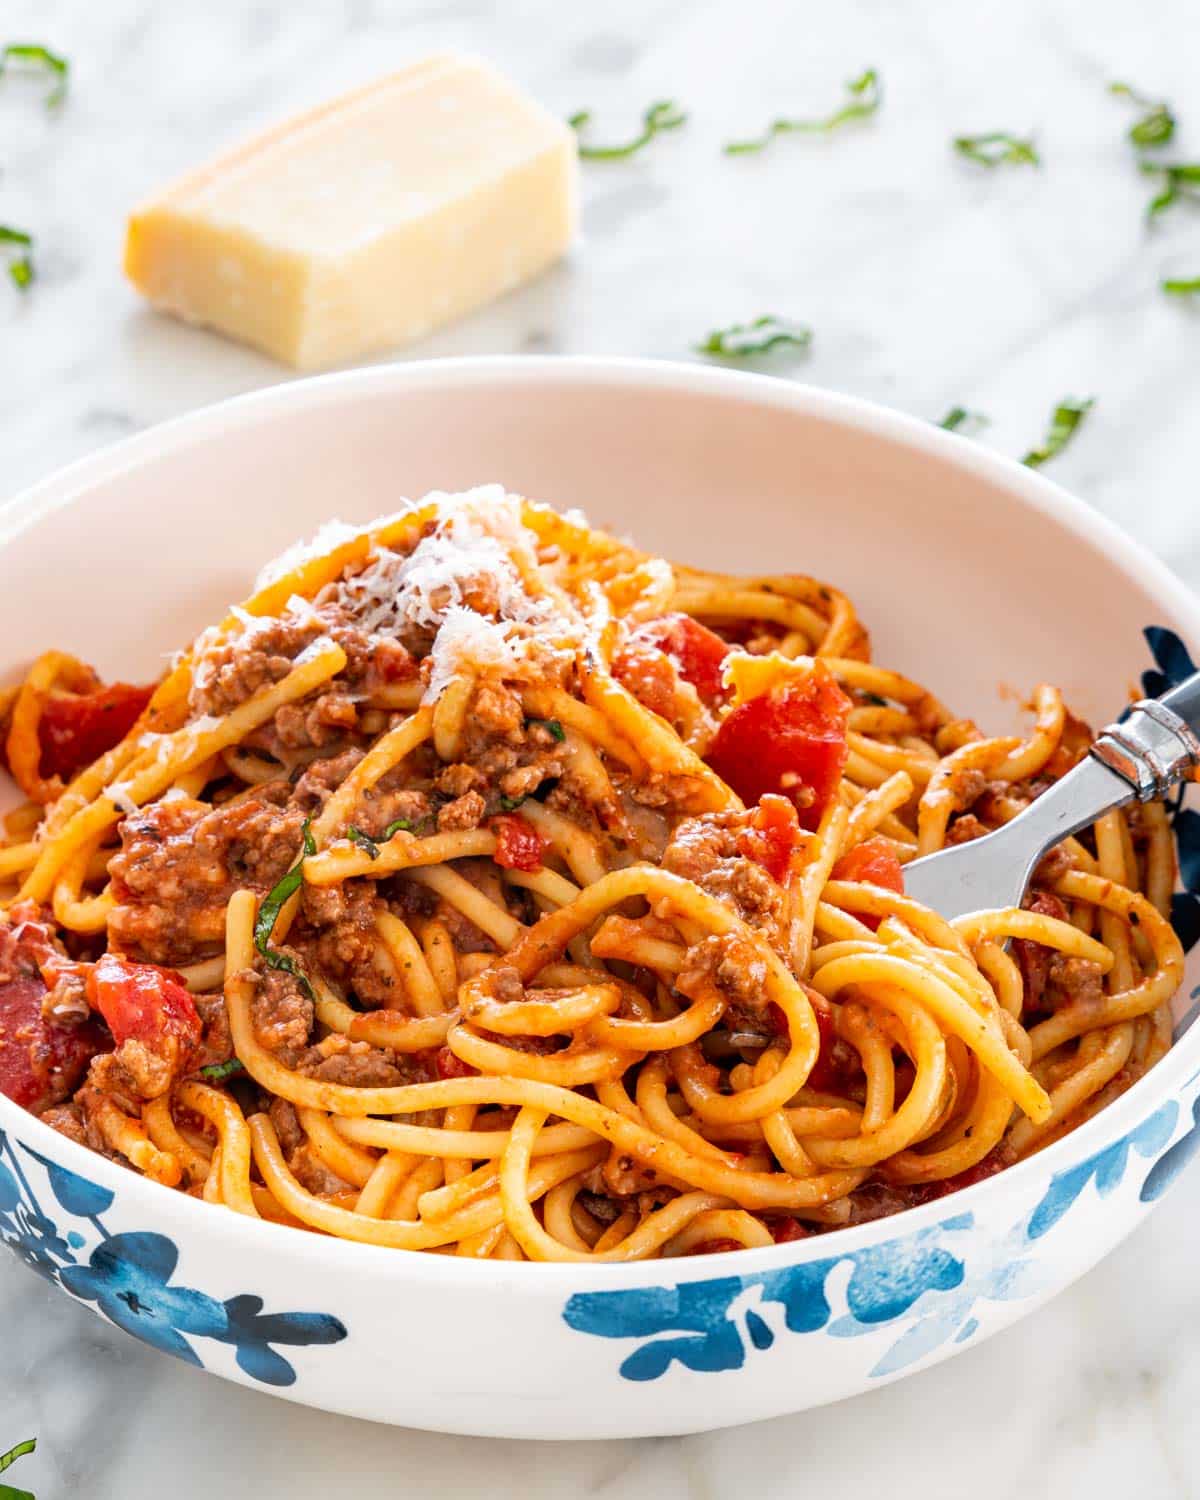 spaghetti casserole in a white and blue plate